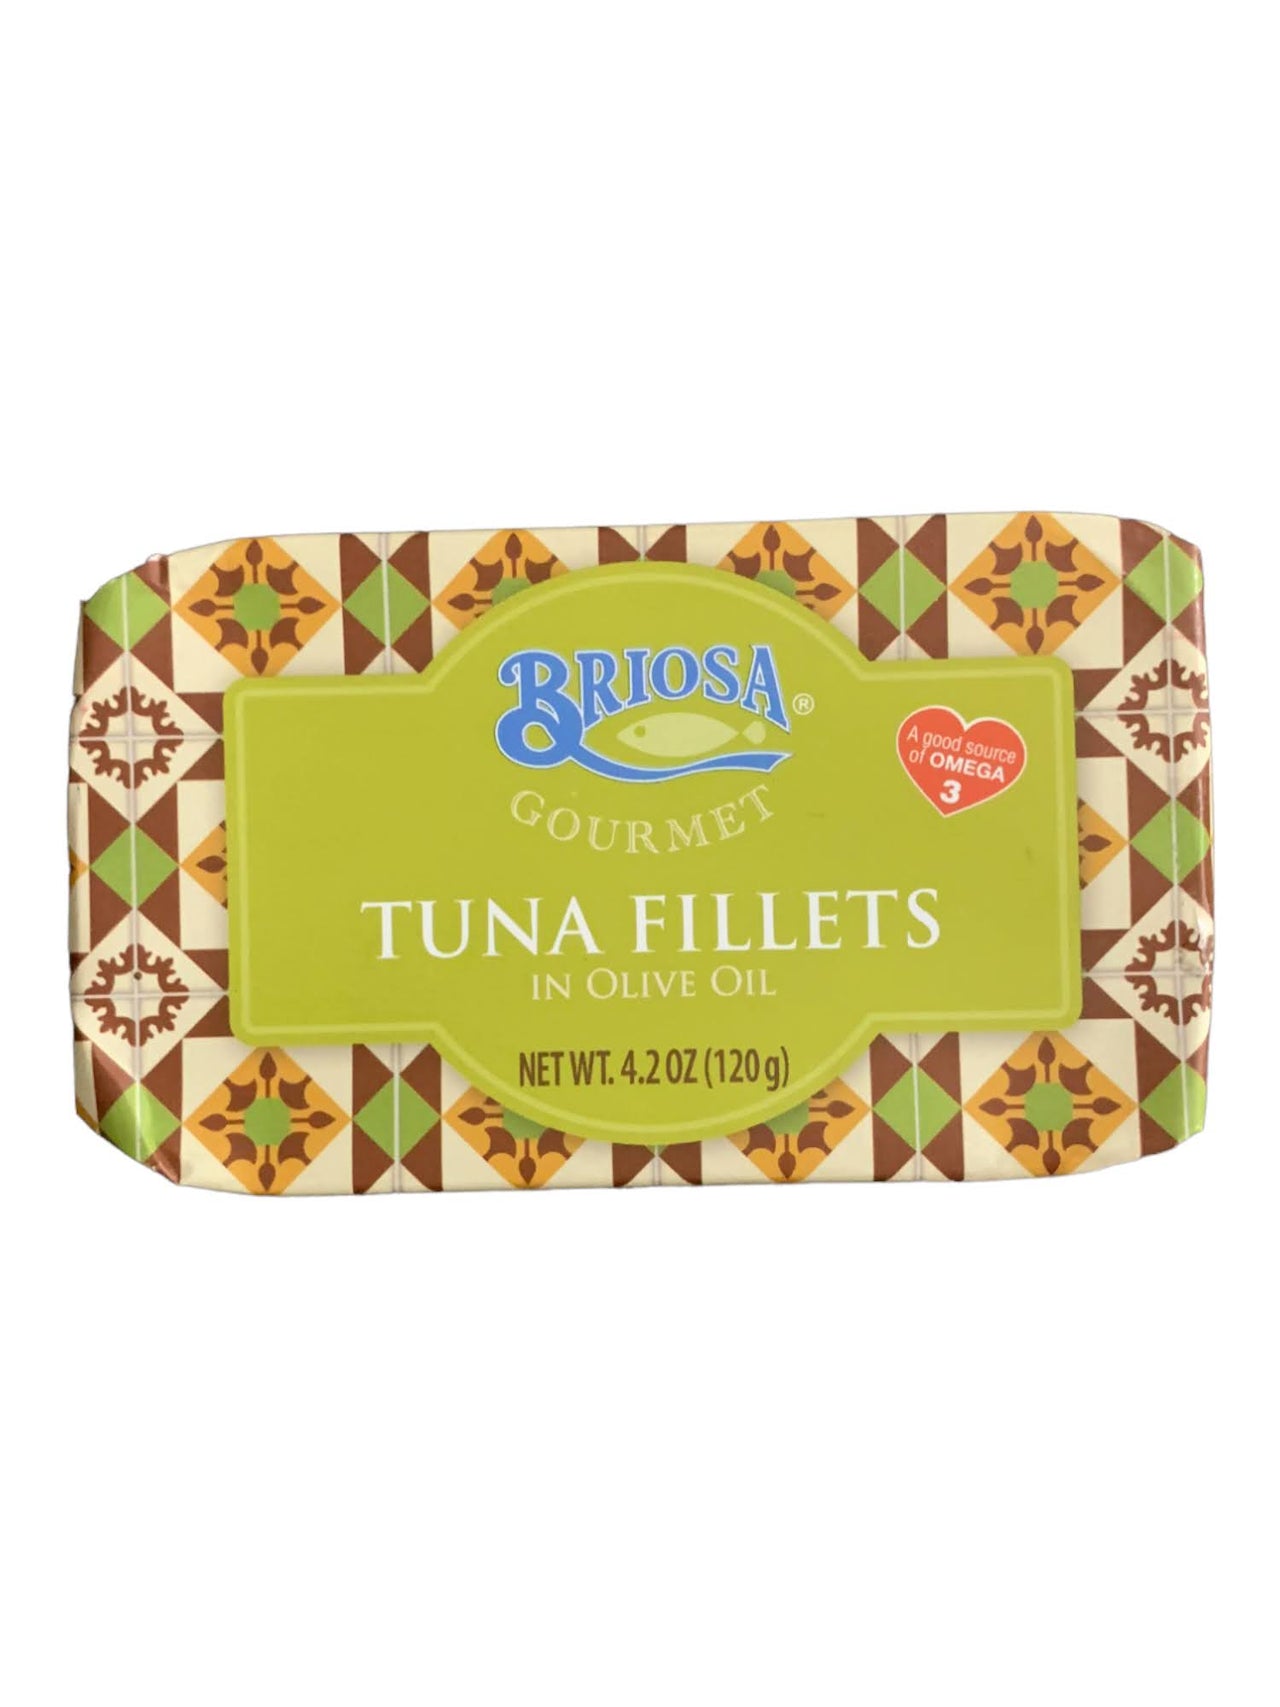 Briosa Gourmet Tuna Fillets in Olive Oil - 3 Pack - TinCanFish